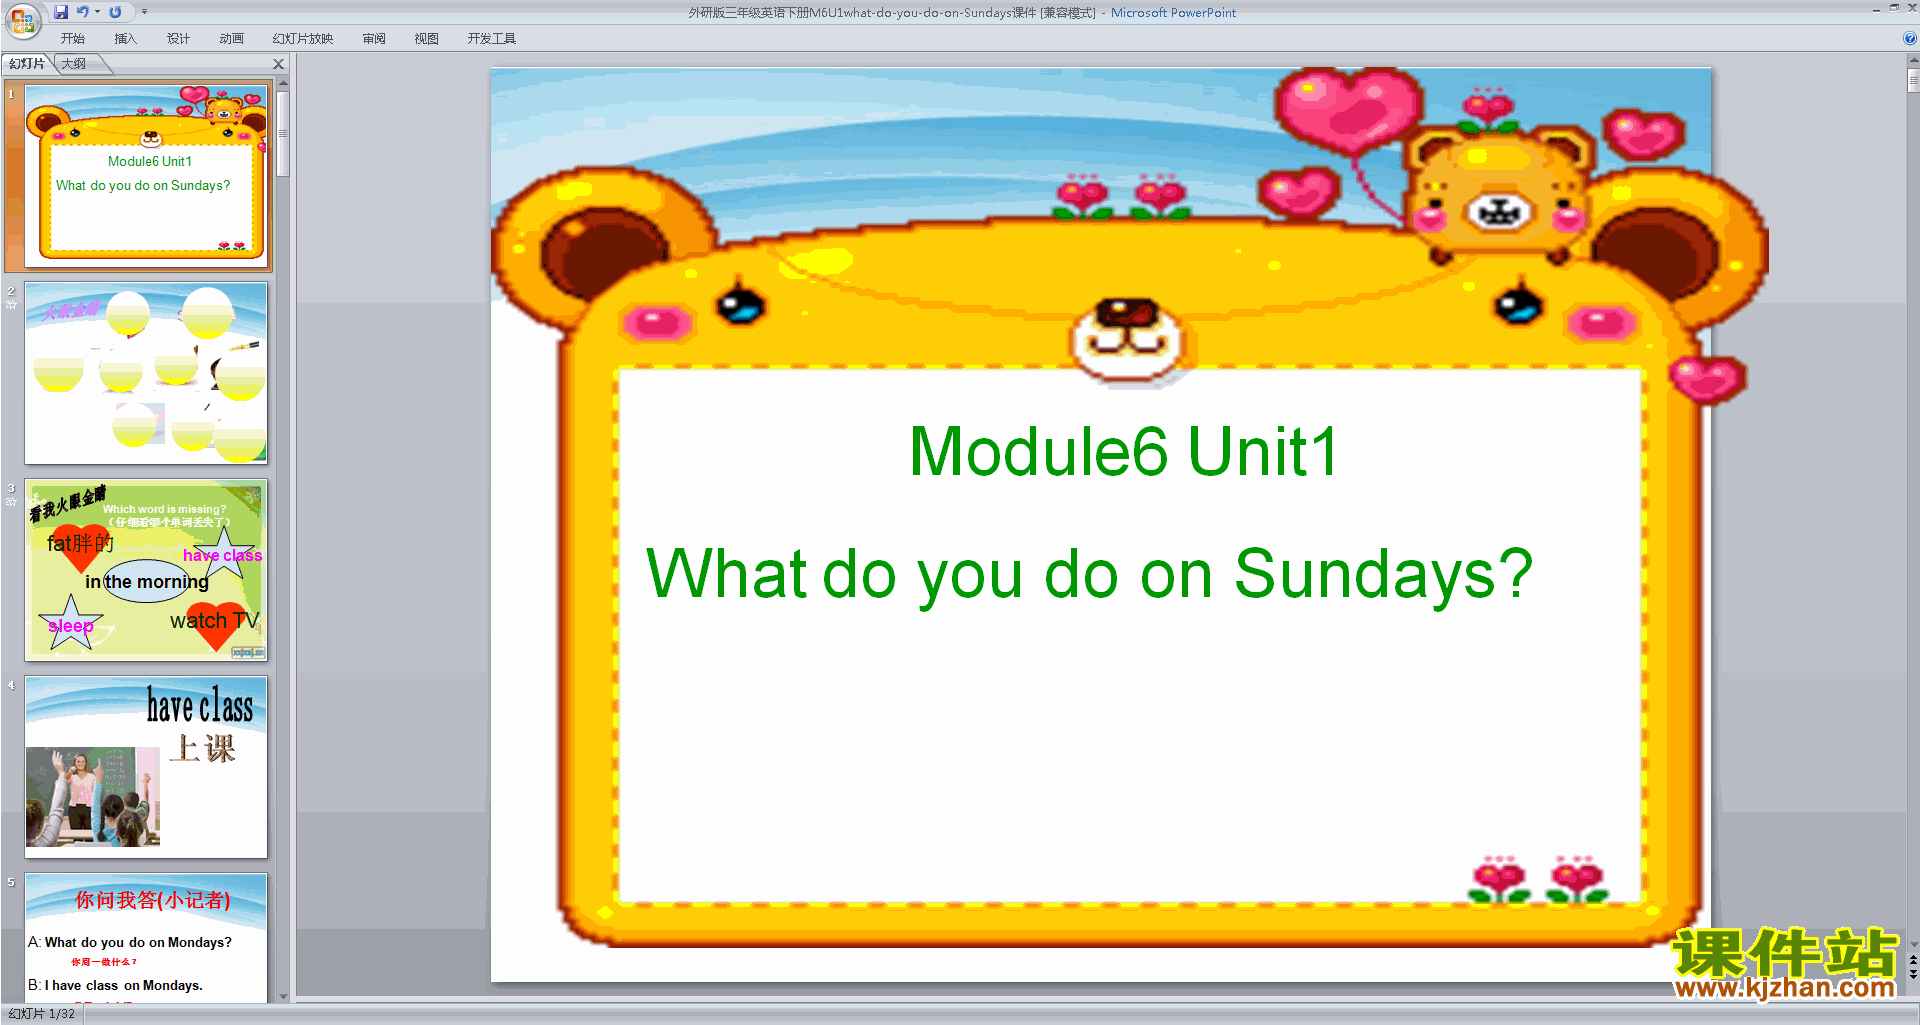 пModule6 Unit1 What do you do on Sundayspptμ